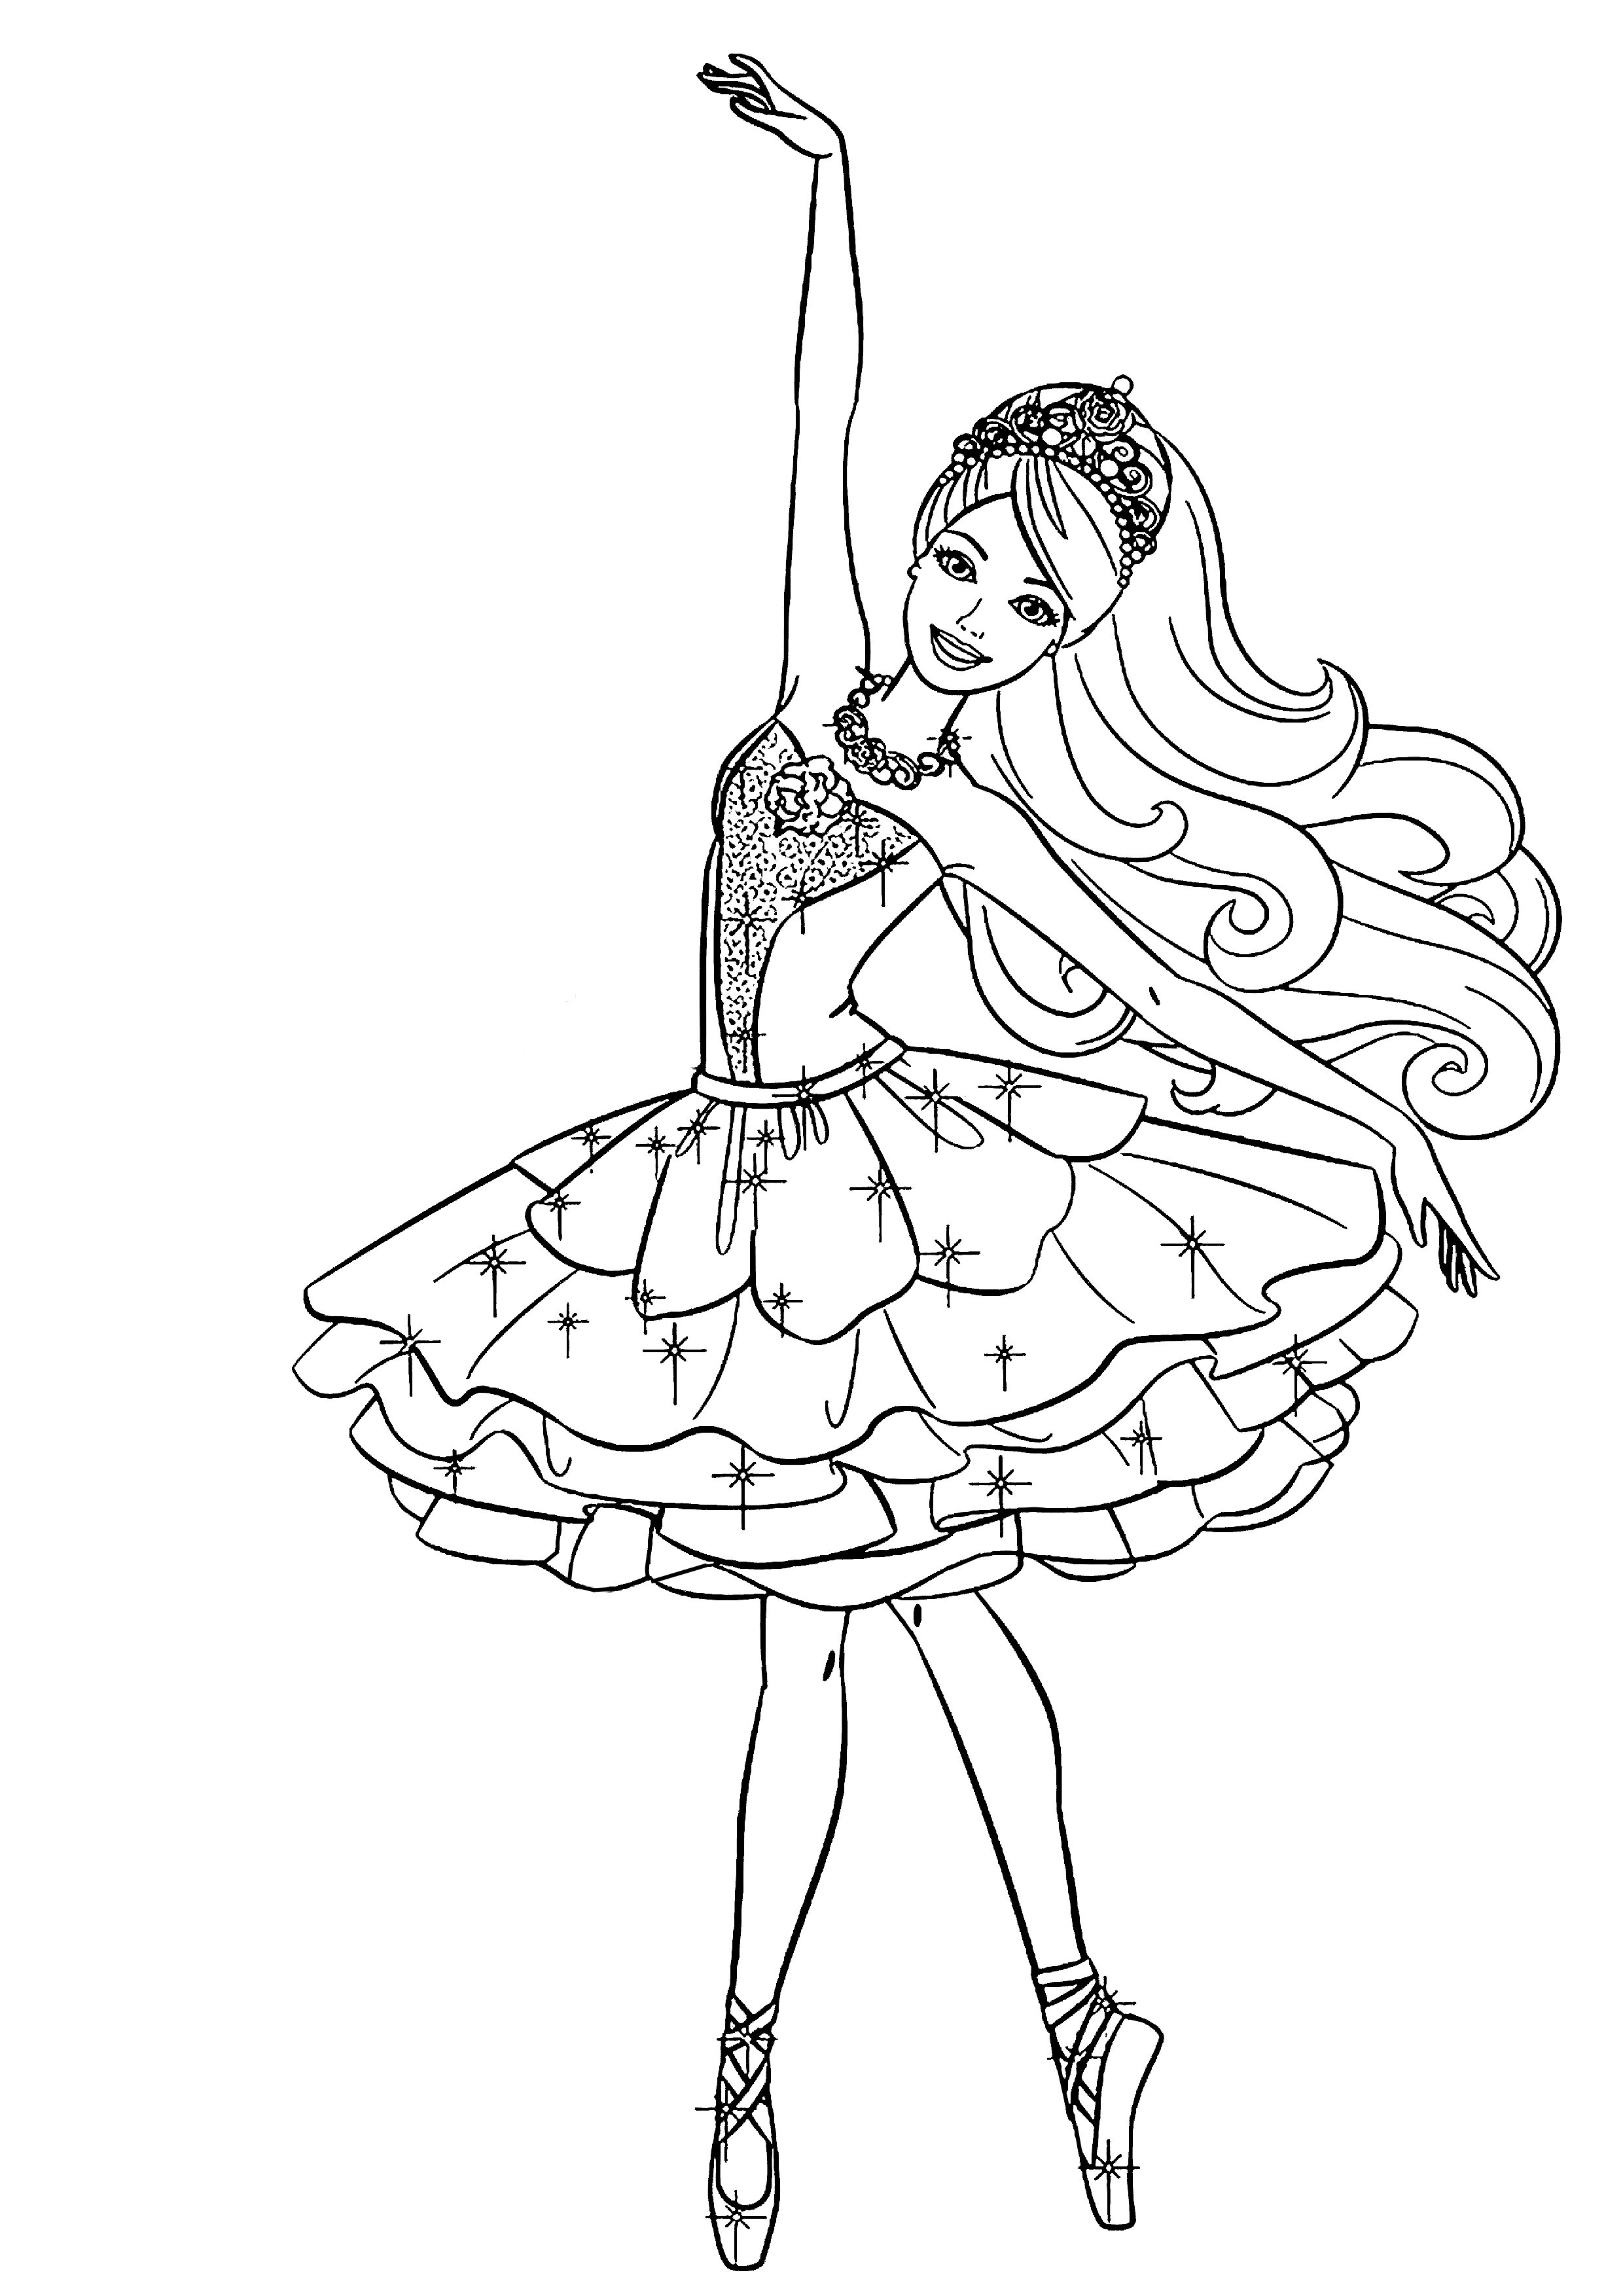 Раскраски барби а4. Раскраски для девочек Барби балерина. Раскраска Барби принцесса балерина. Раскраски для девочек 12 лет Барби балерина. Раскраски для девочек Барби на балу.